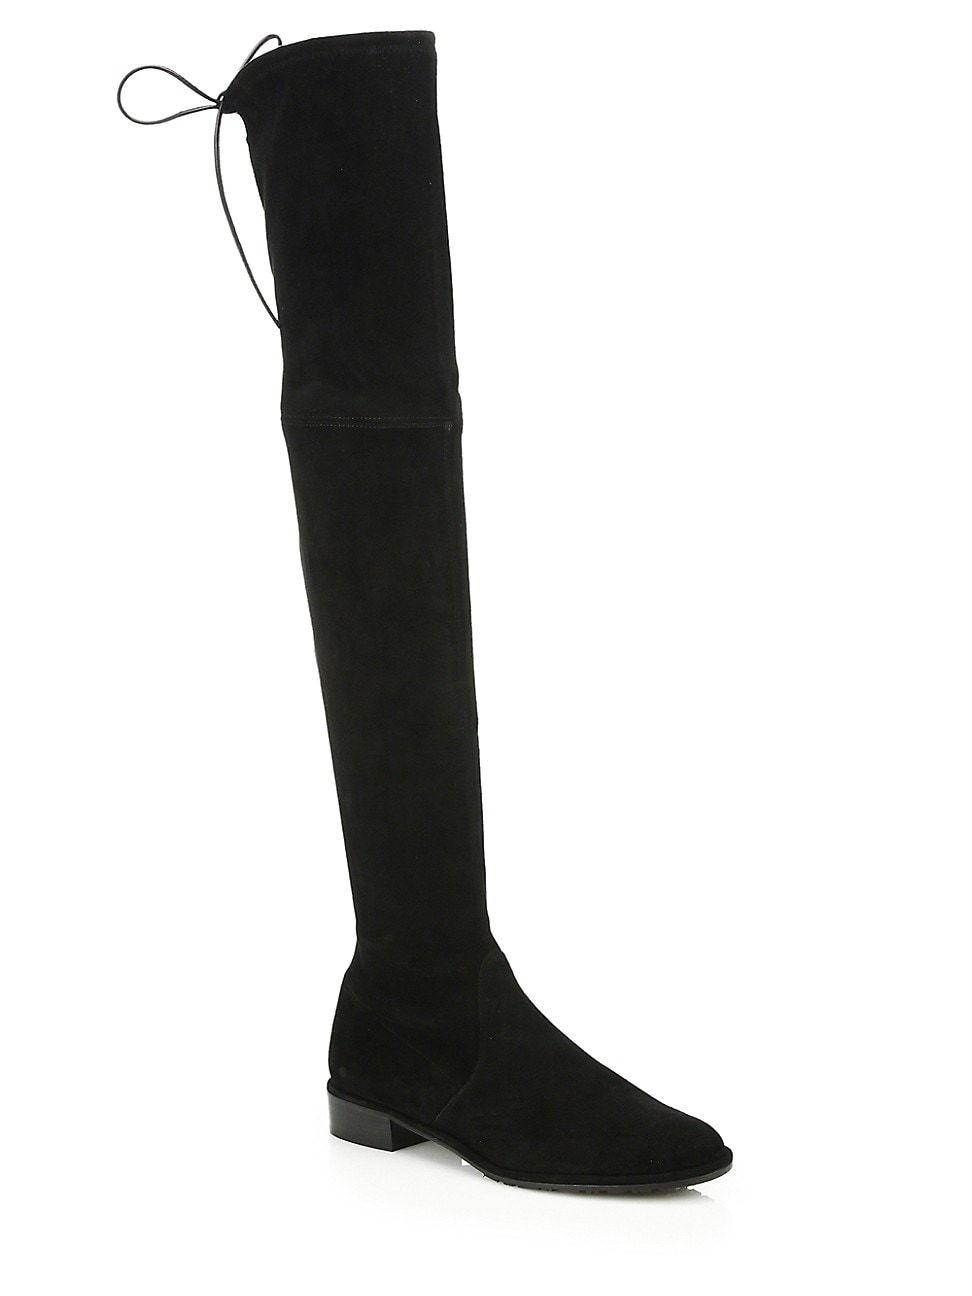 Stuart Weitzman Women's Lowland Suede Thigh-High Boots - Black - Size 9 | Saks Fifth Avenue